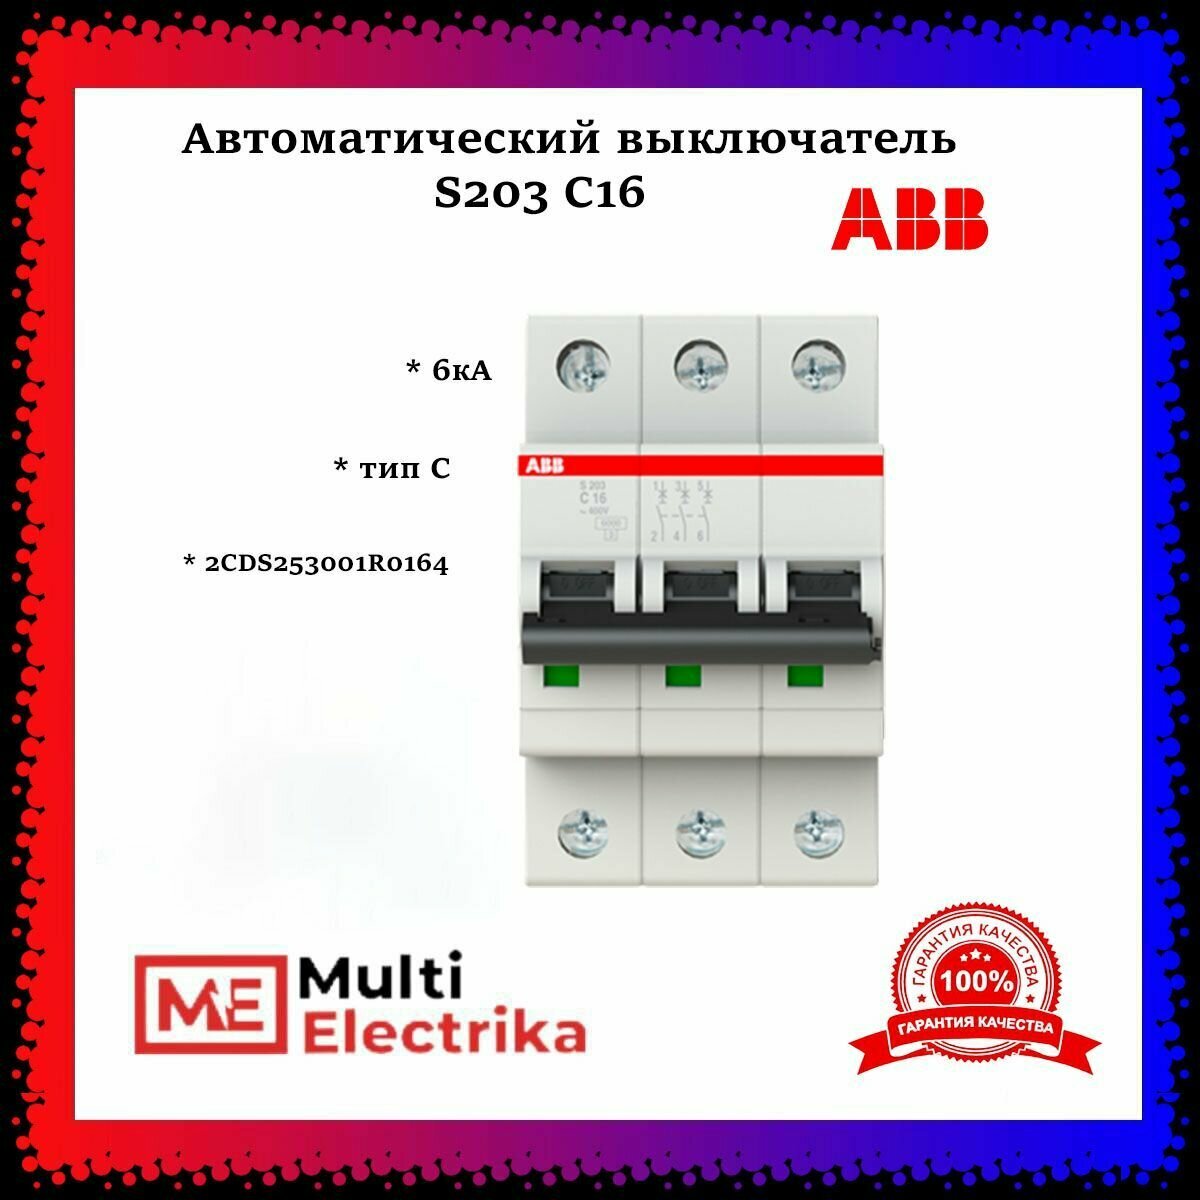 Автоматический выключатель ABB S203 C16 6кА тип C 2CDS253001R0164